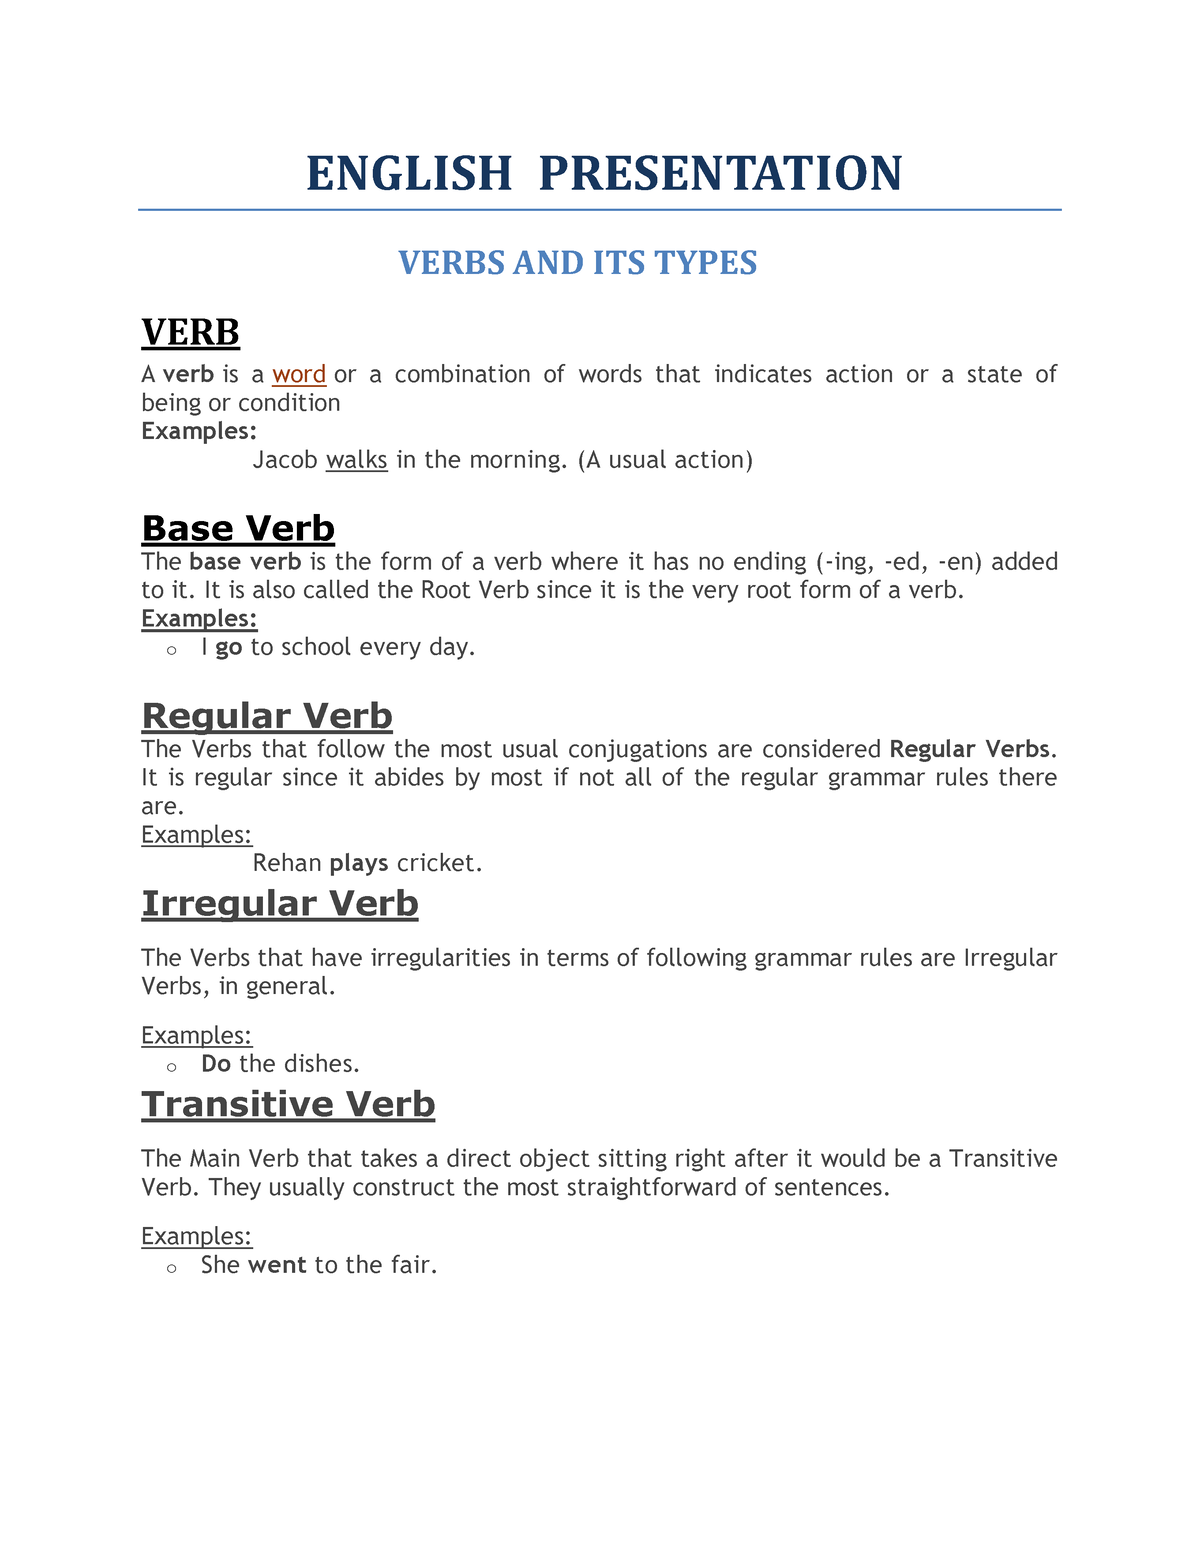 2verb-and-its-types-english-presentation-english-presentation-verbs